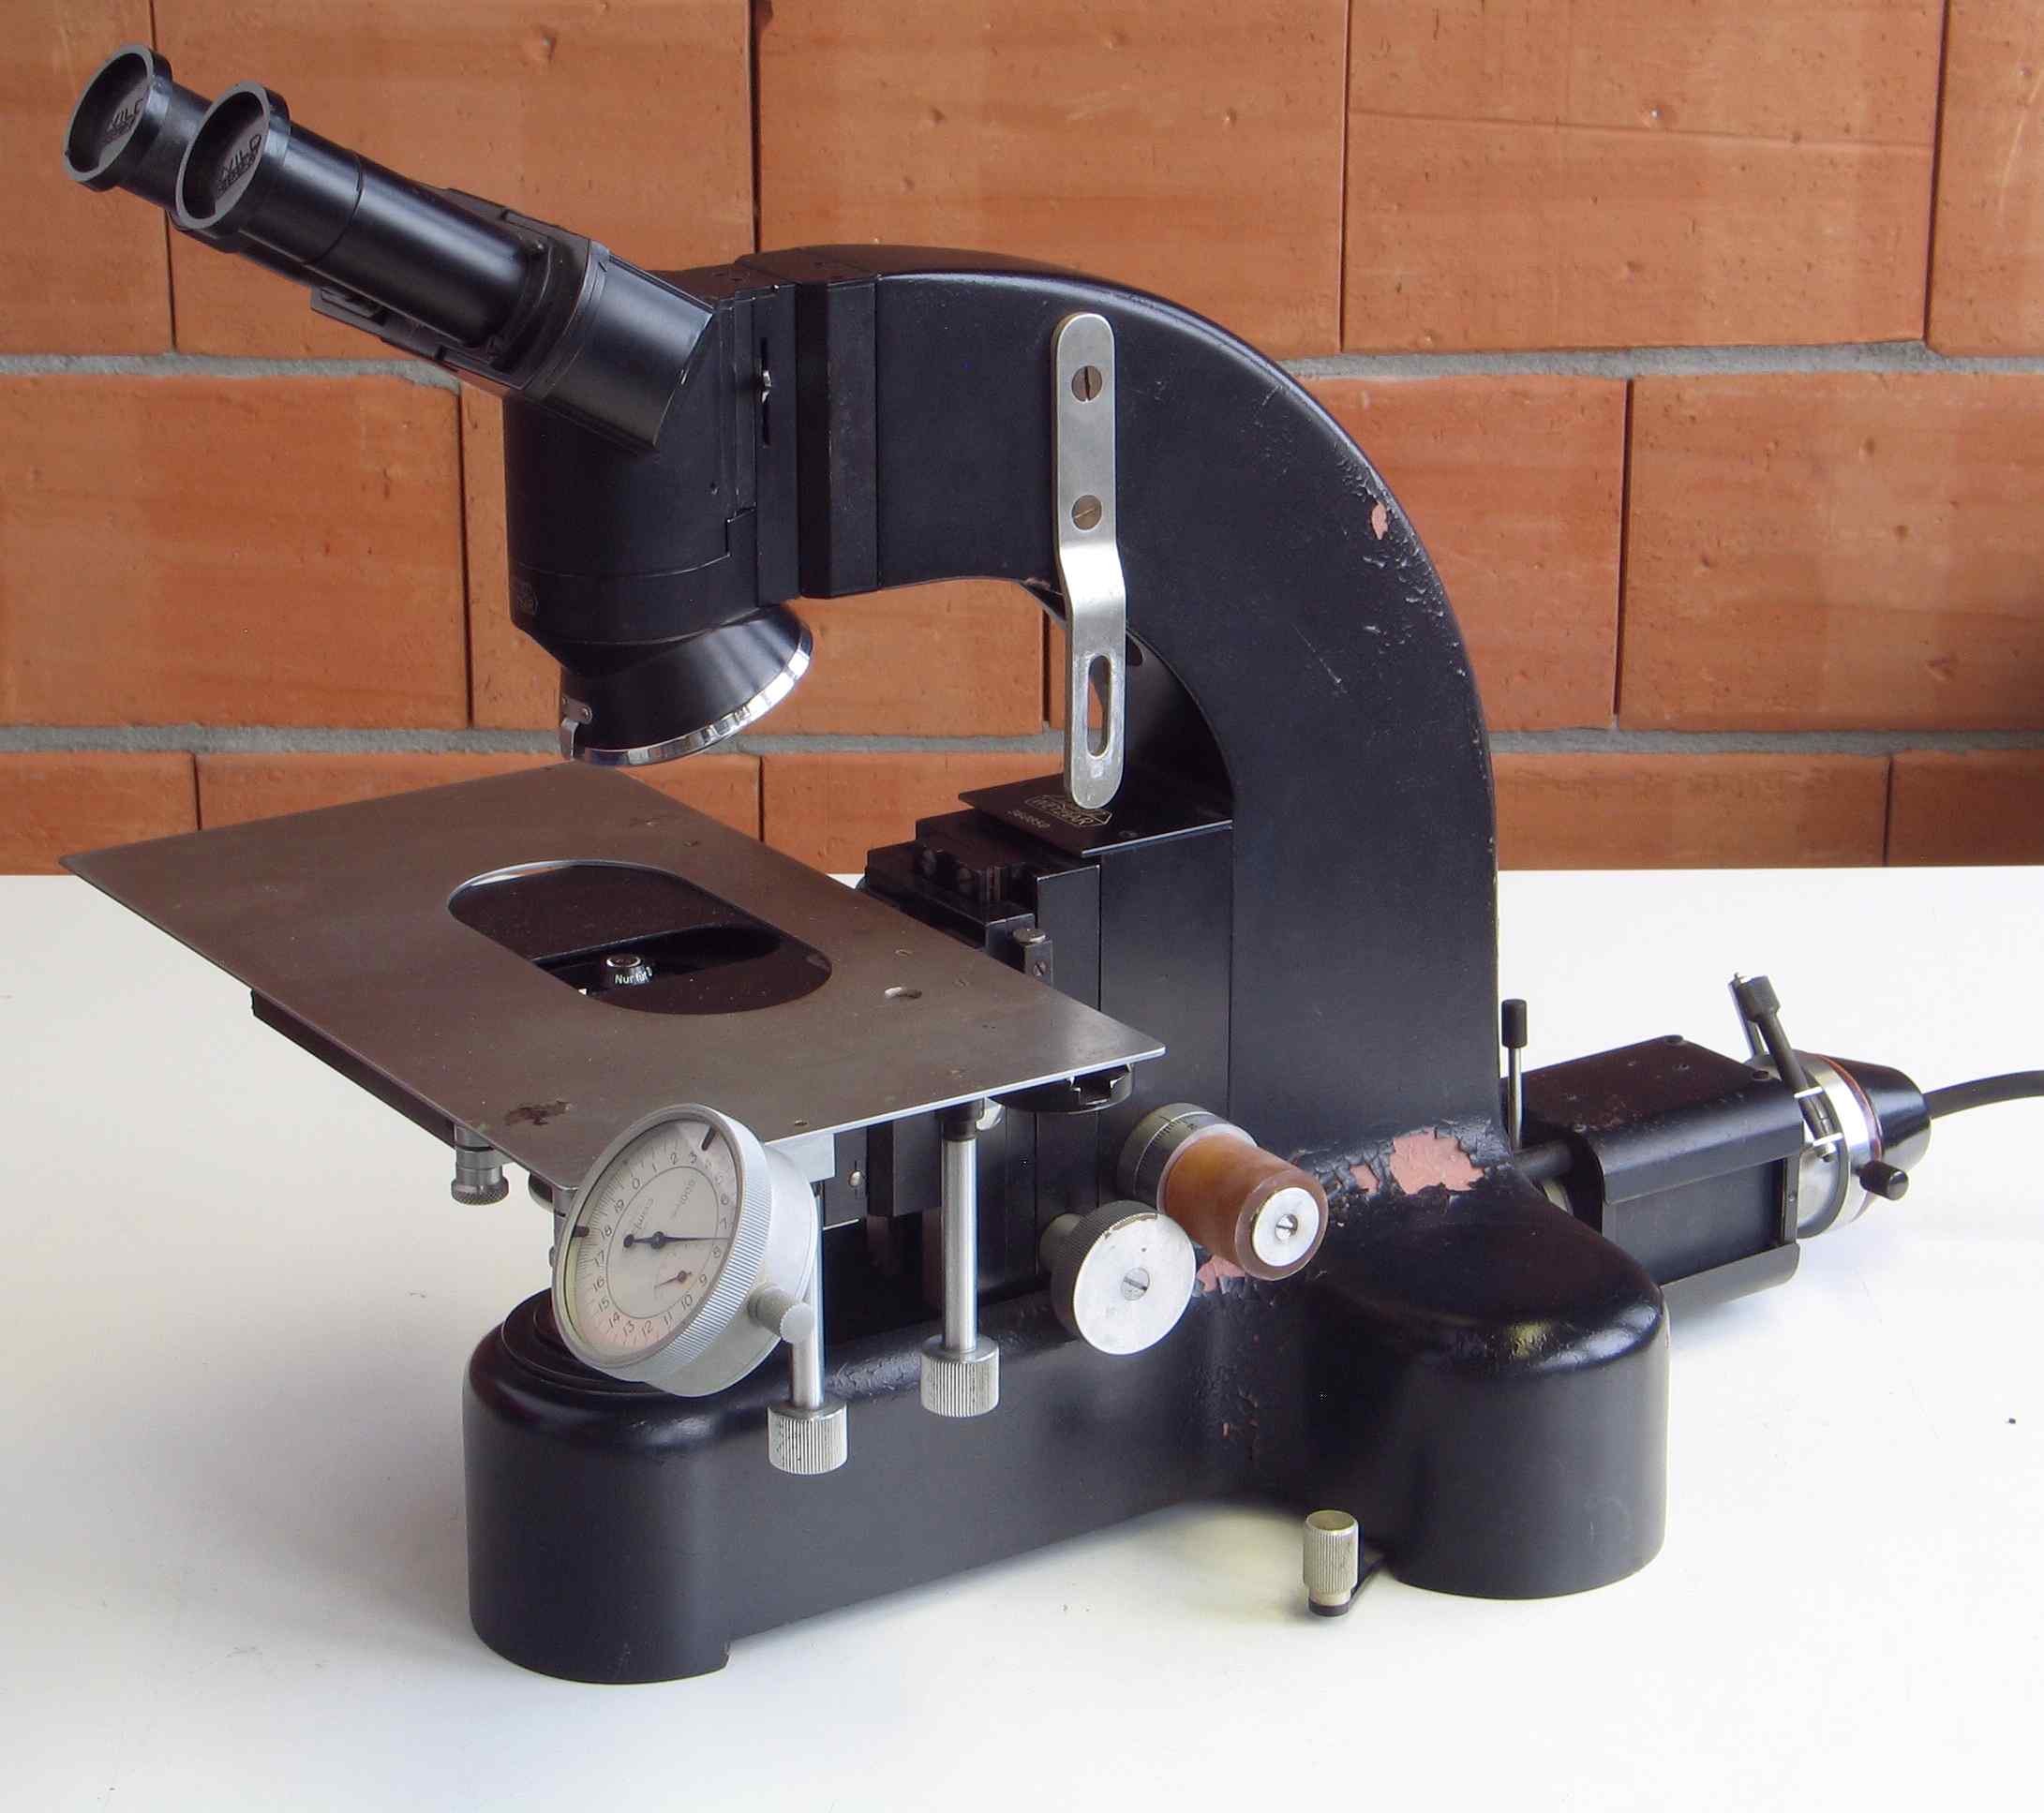 Microscopes
(Leitz Ortholux)